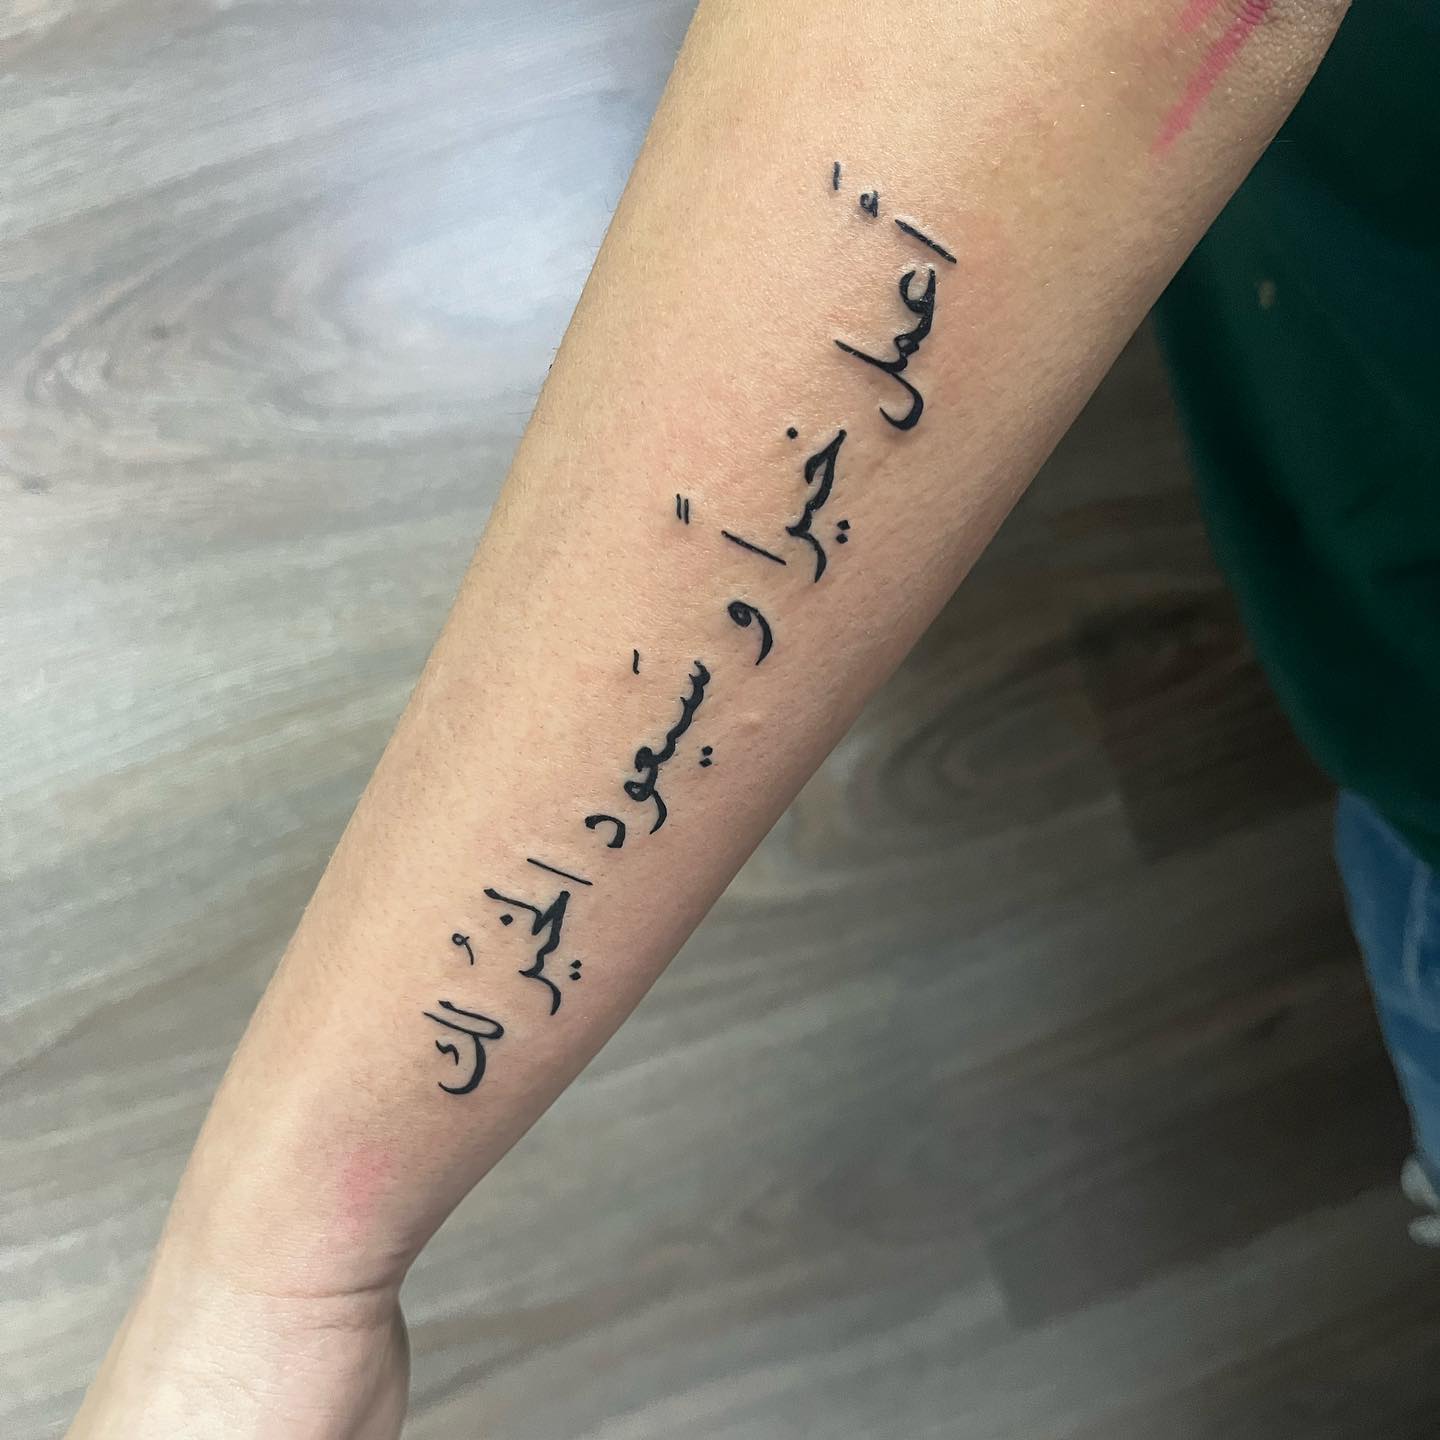 Tatuaje árabe significativo